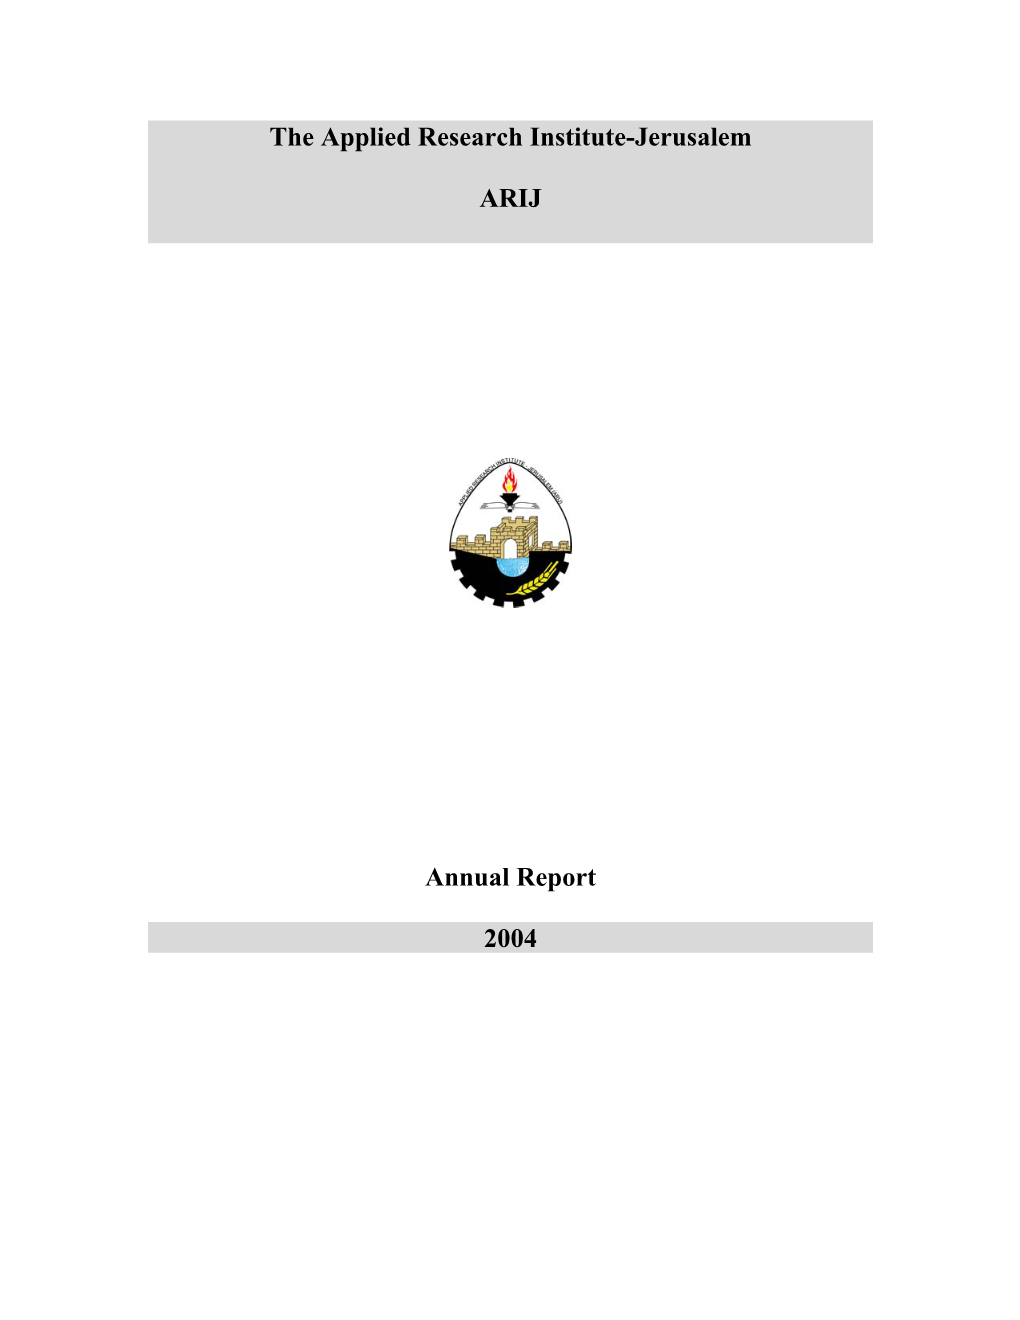 Annual Report 2004 in English